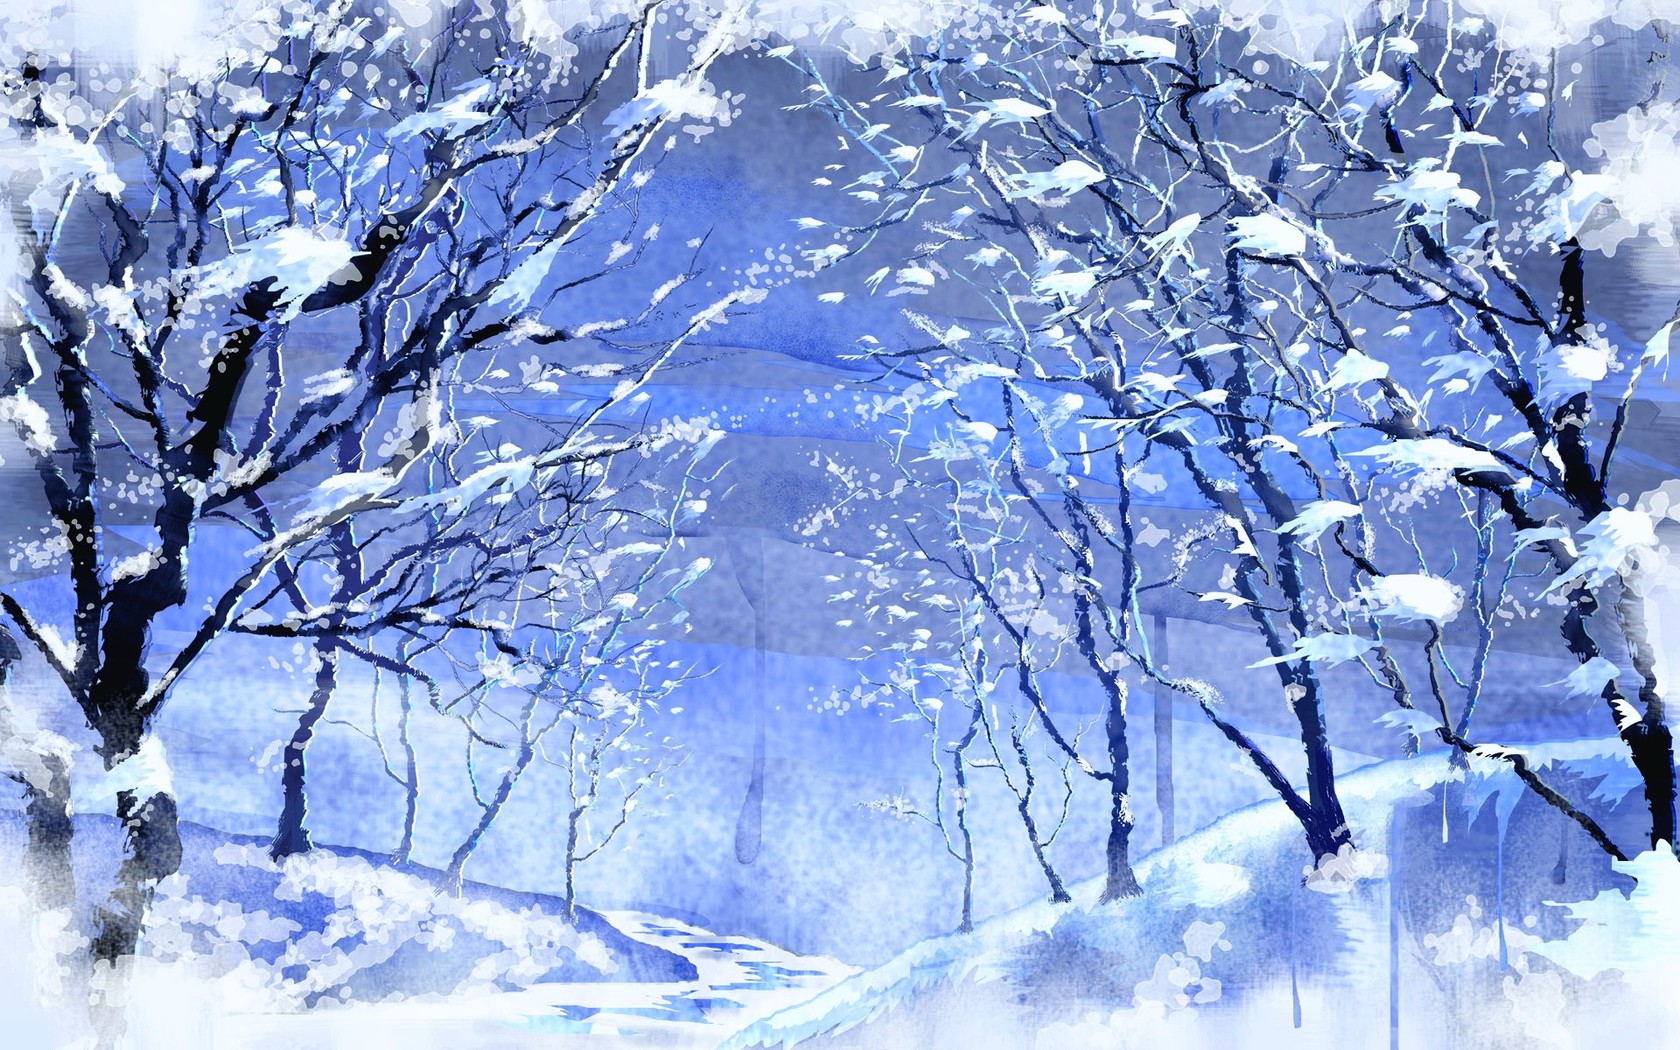 Snowy forest wallpaper 4687 1680x1050